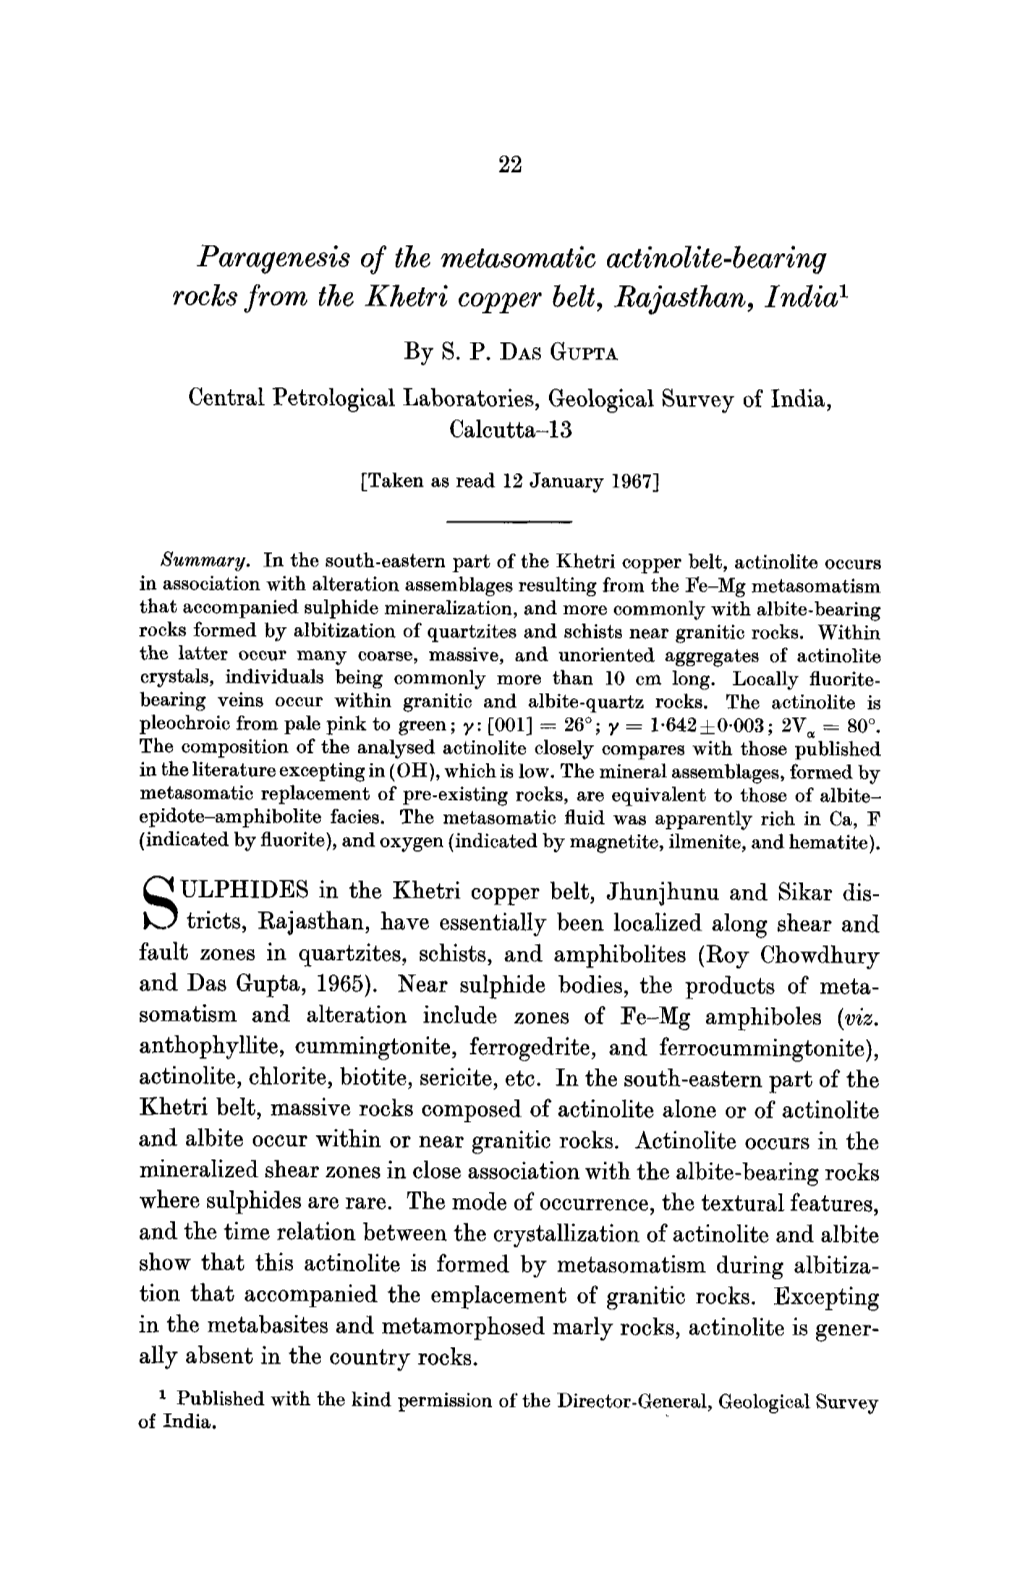 Paragenesis of the Metasomatic Actinolite-Bearing Rocks from the Khetri Copper Belt, Rajasthan, India 1